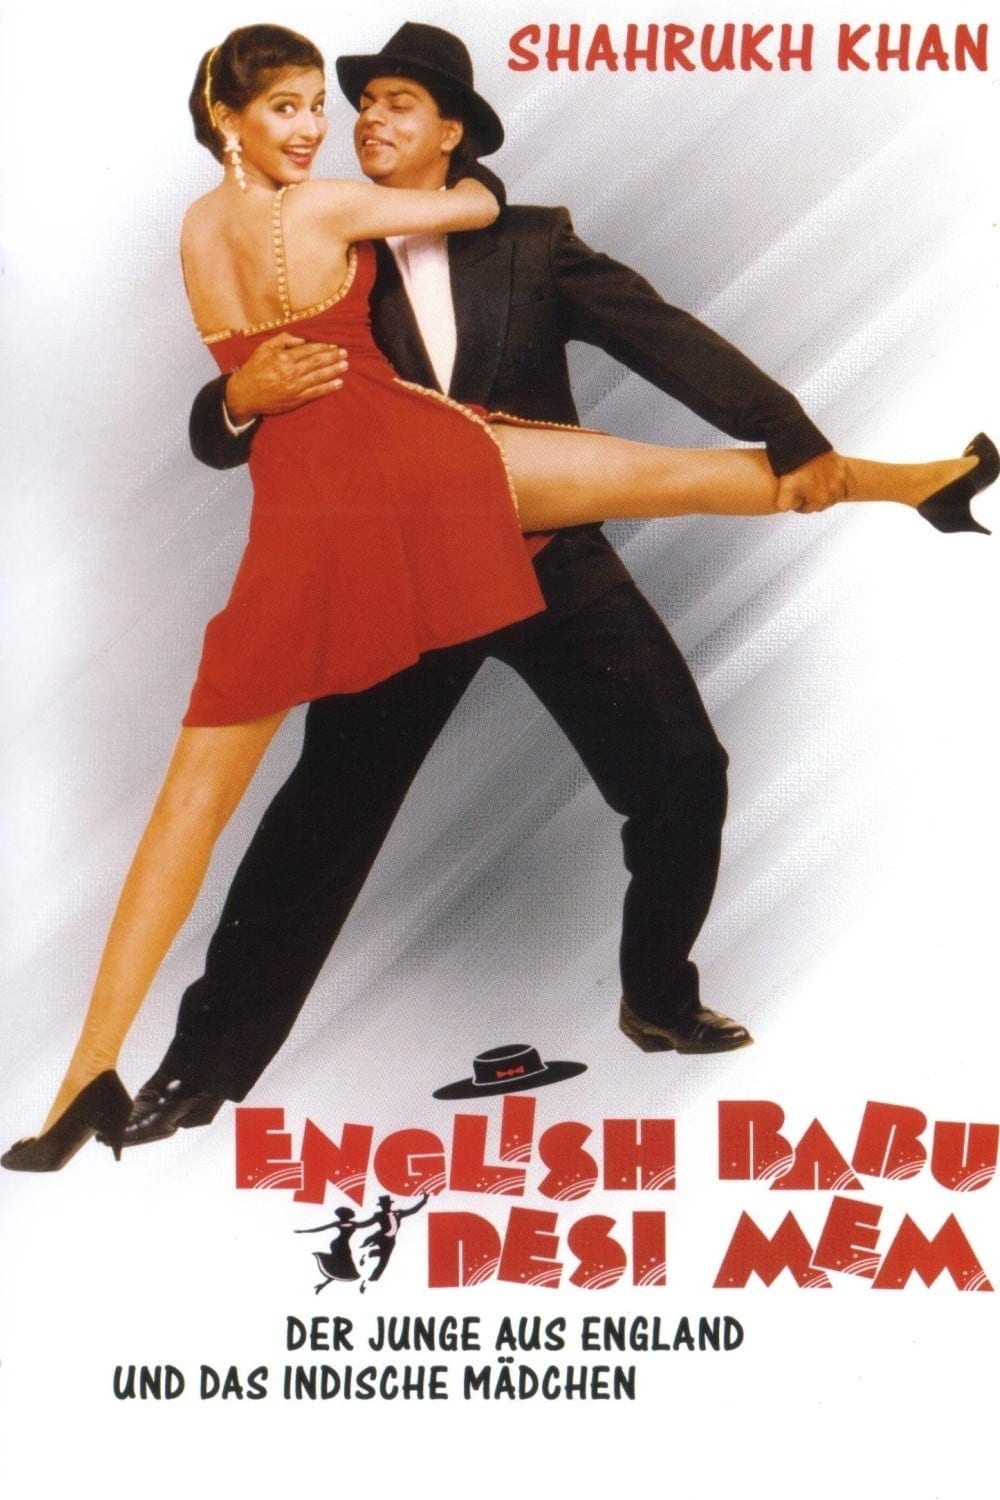 Poster for the movie "English Babu Desi Mem"